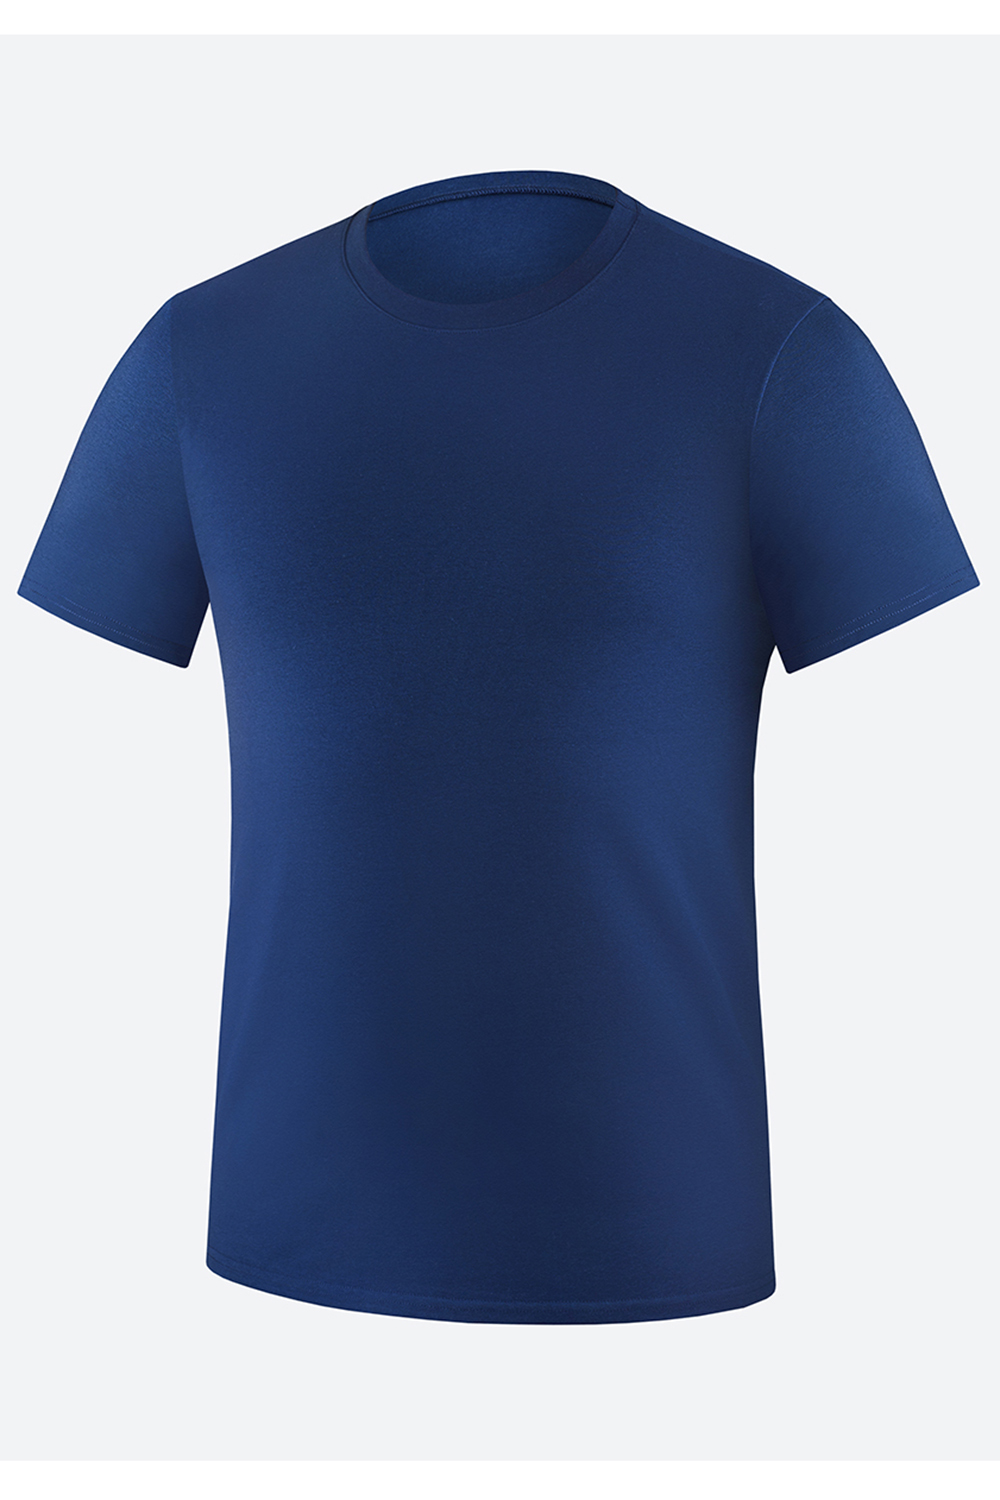 Классическая темно-синяя футболка